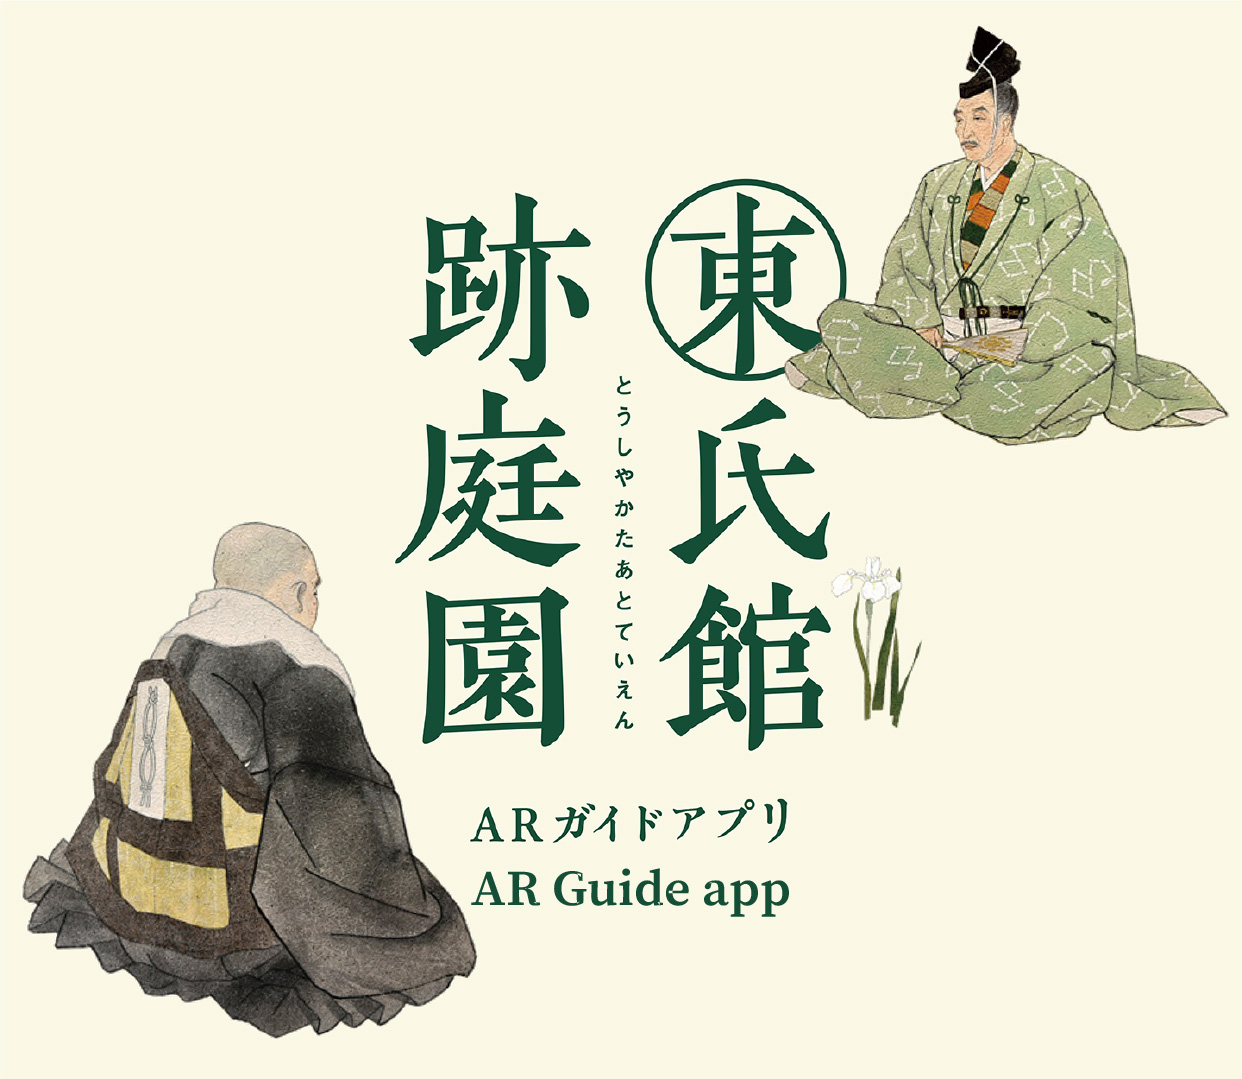 Enjoy Toshi-yakataato-teien by AR Tour guide app!